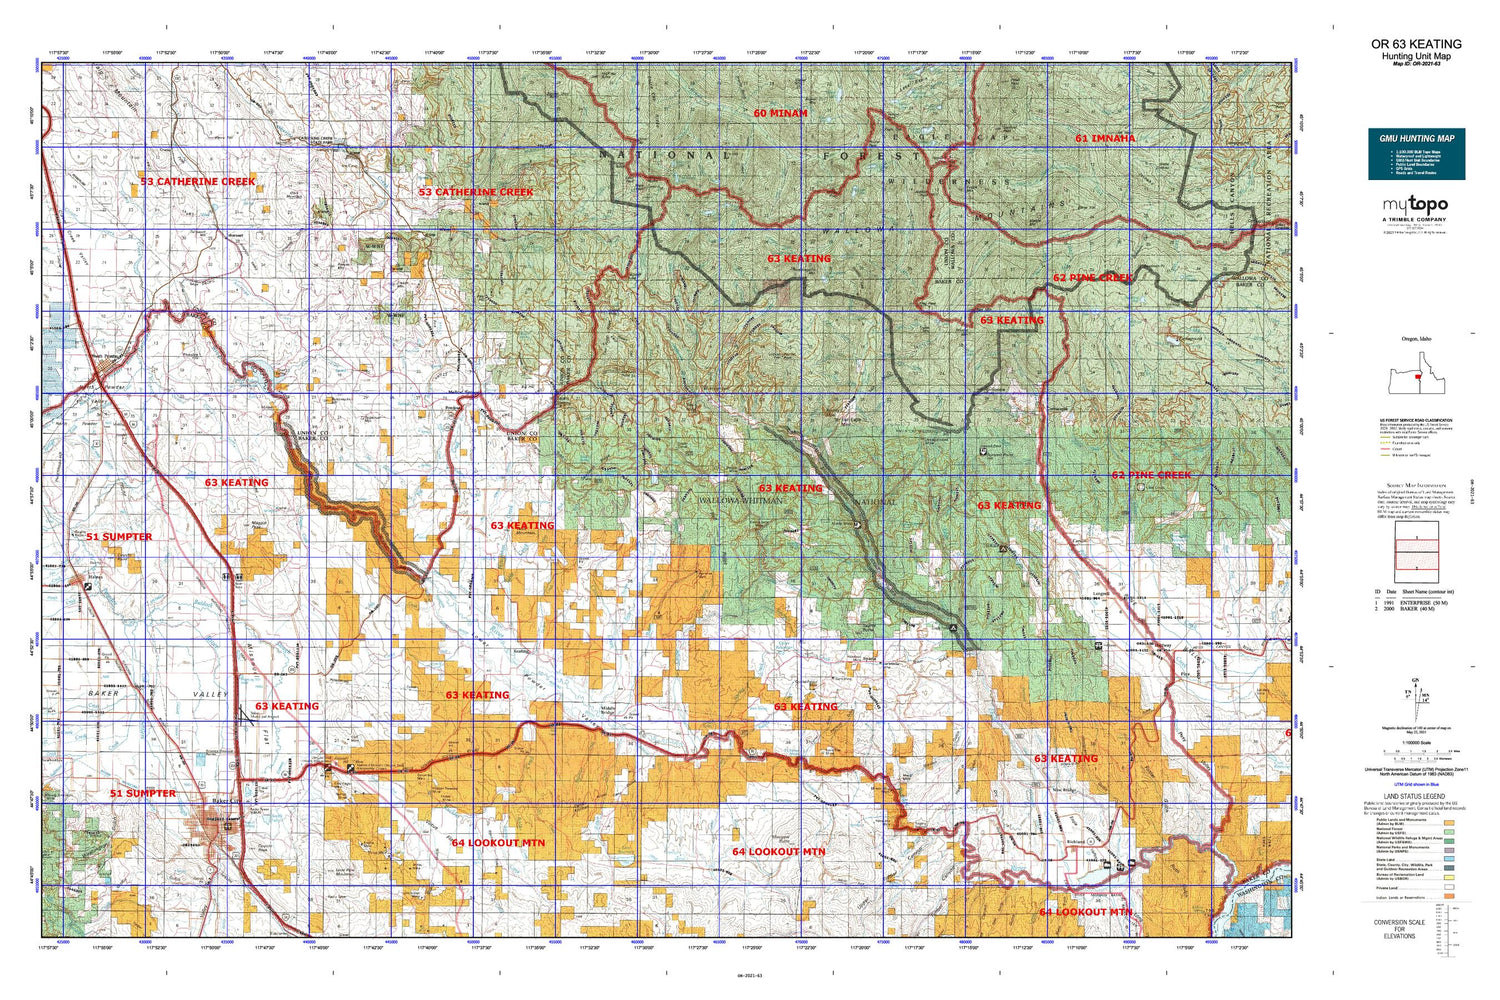 Oregon 63 Keating Map Image